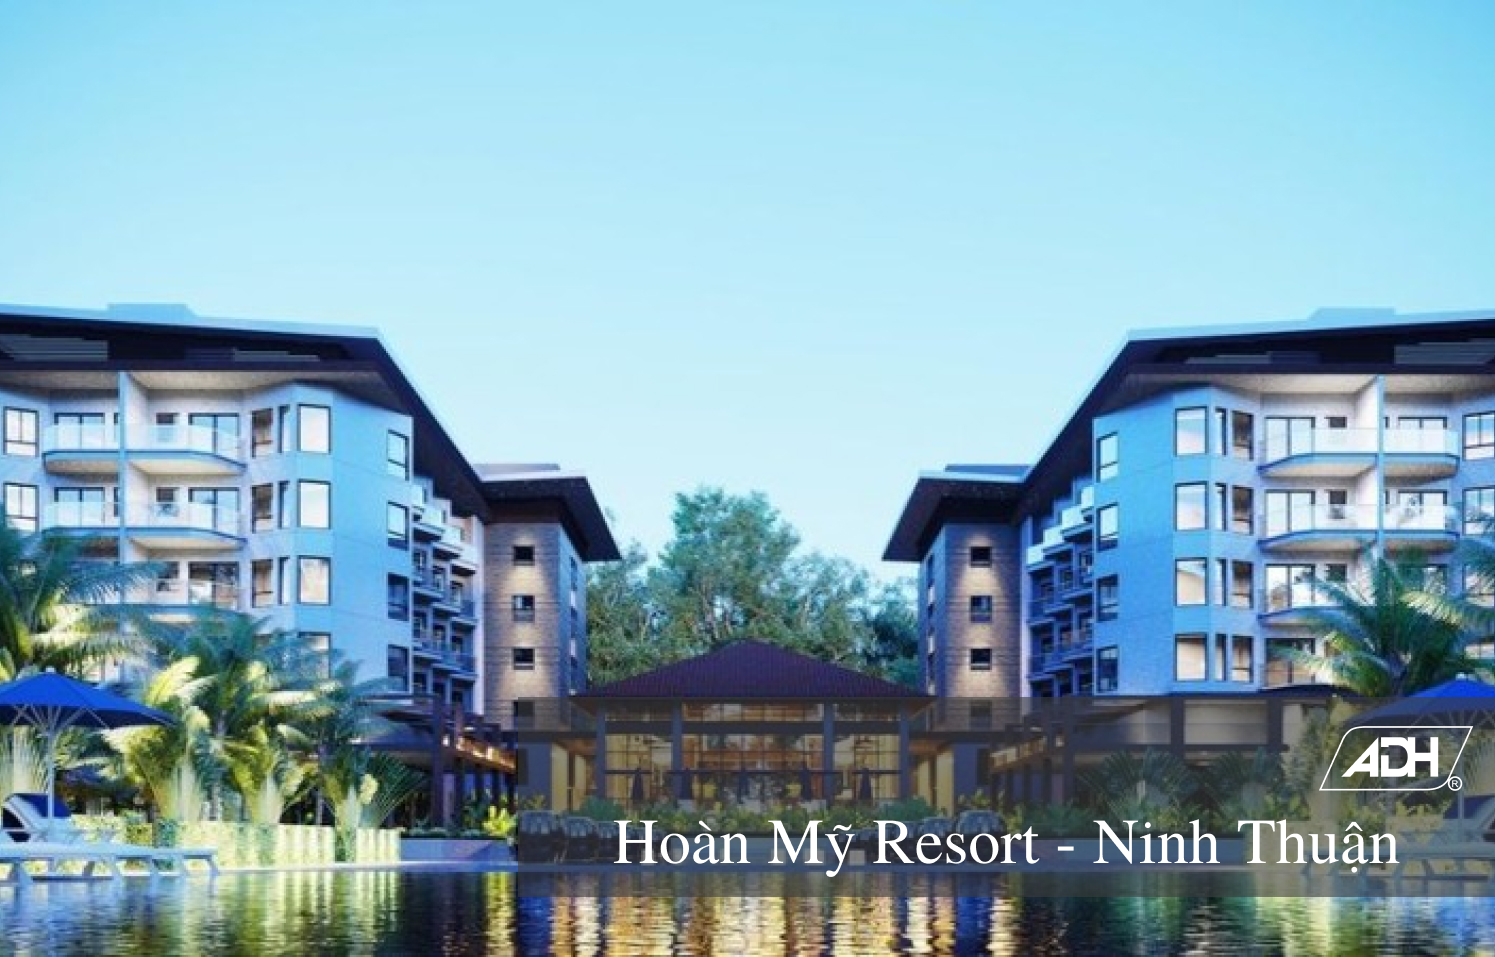 Hoan Mỹ Resort - Ninh Thuận